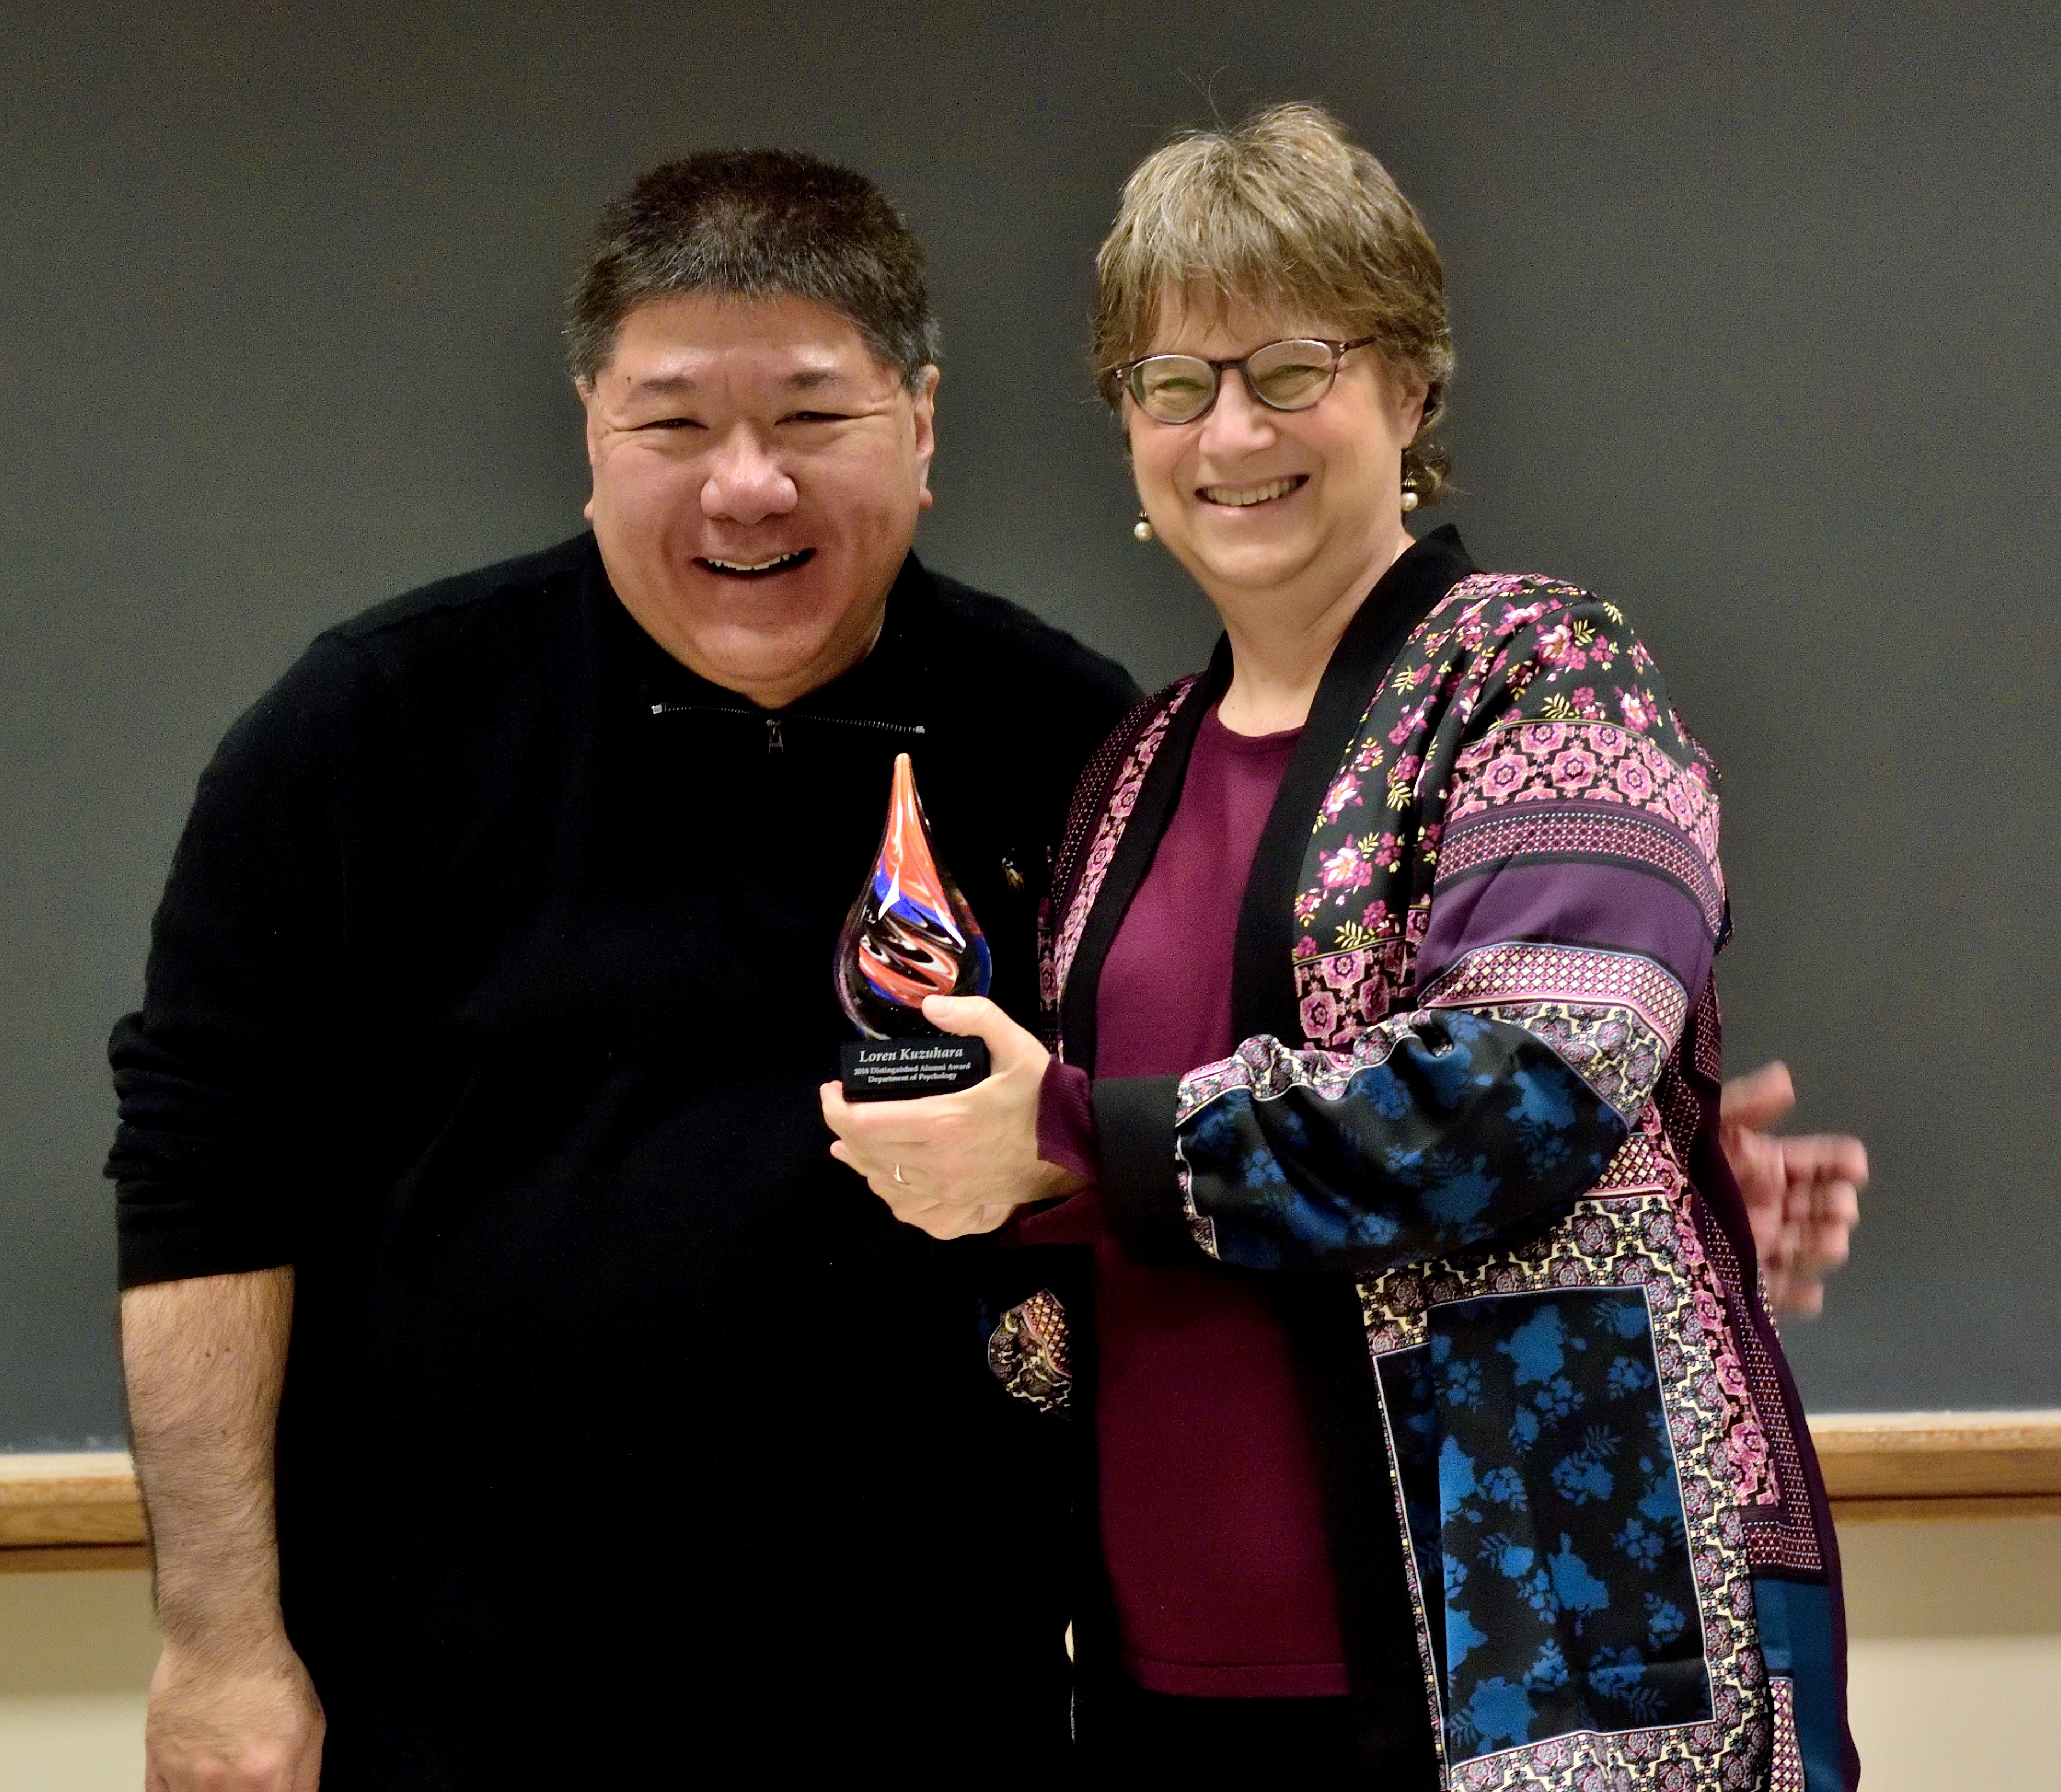 Loren Kuzuhara accepts the award from Wendy Heller, Professor & Head, Department of Psychology